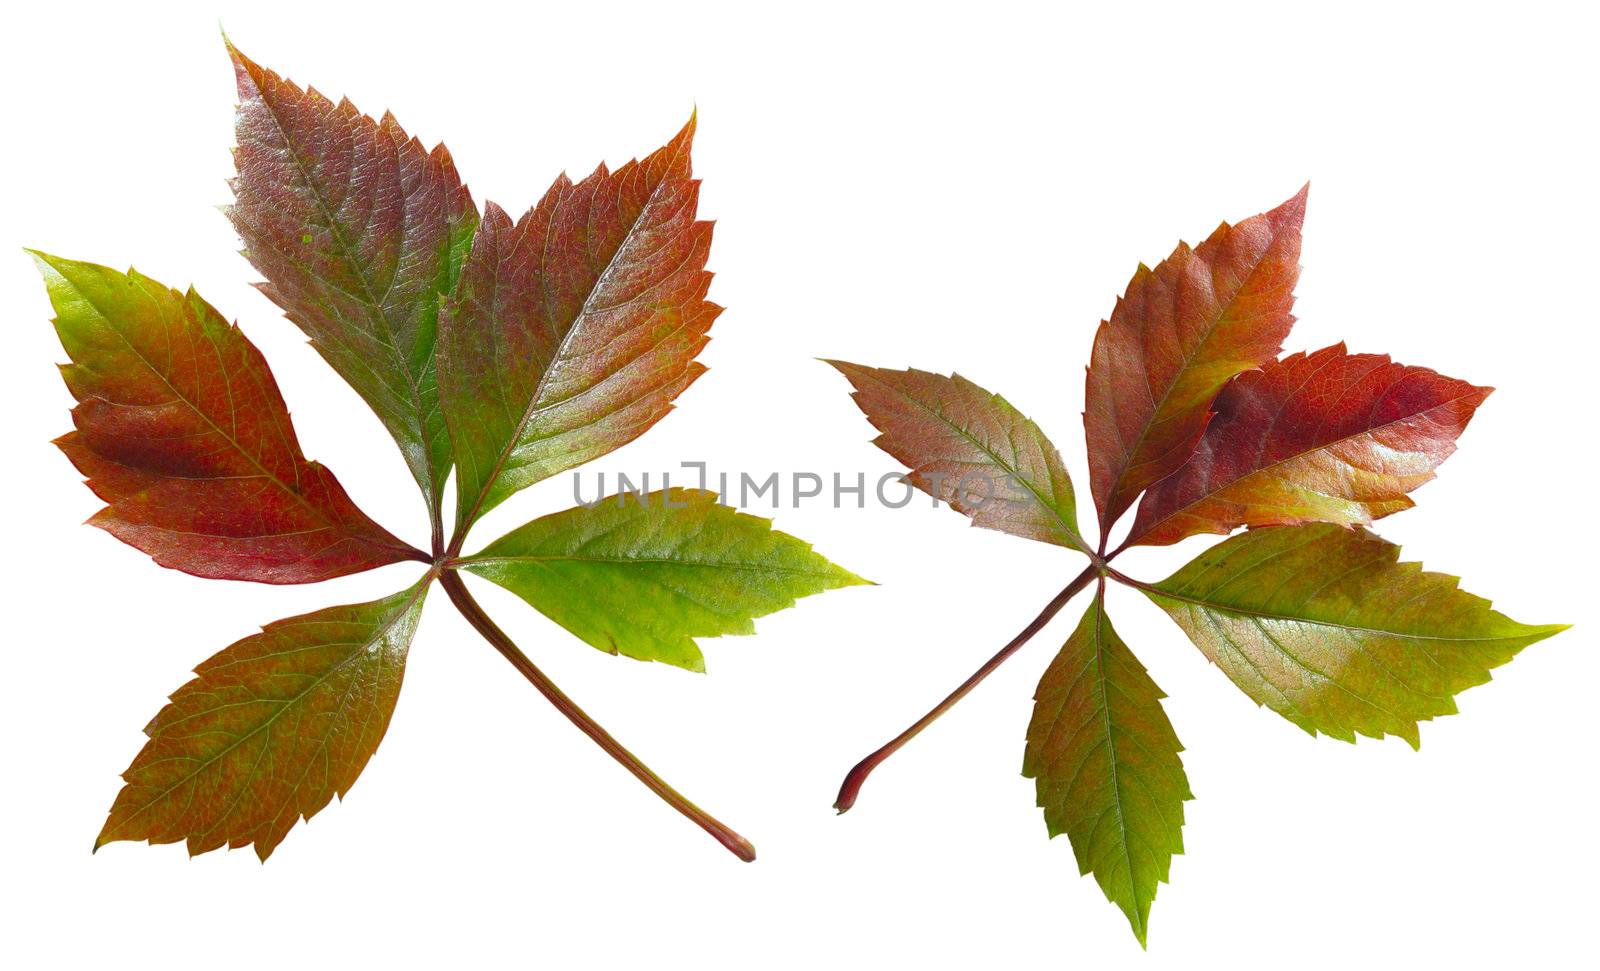 Ivy. Autumn leaves by Kriblikrabli